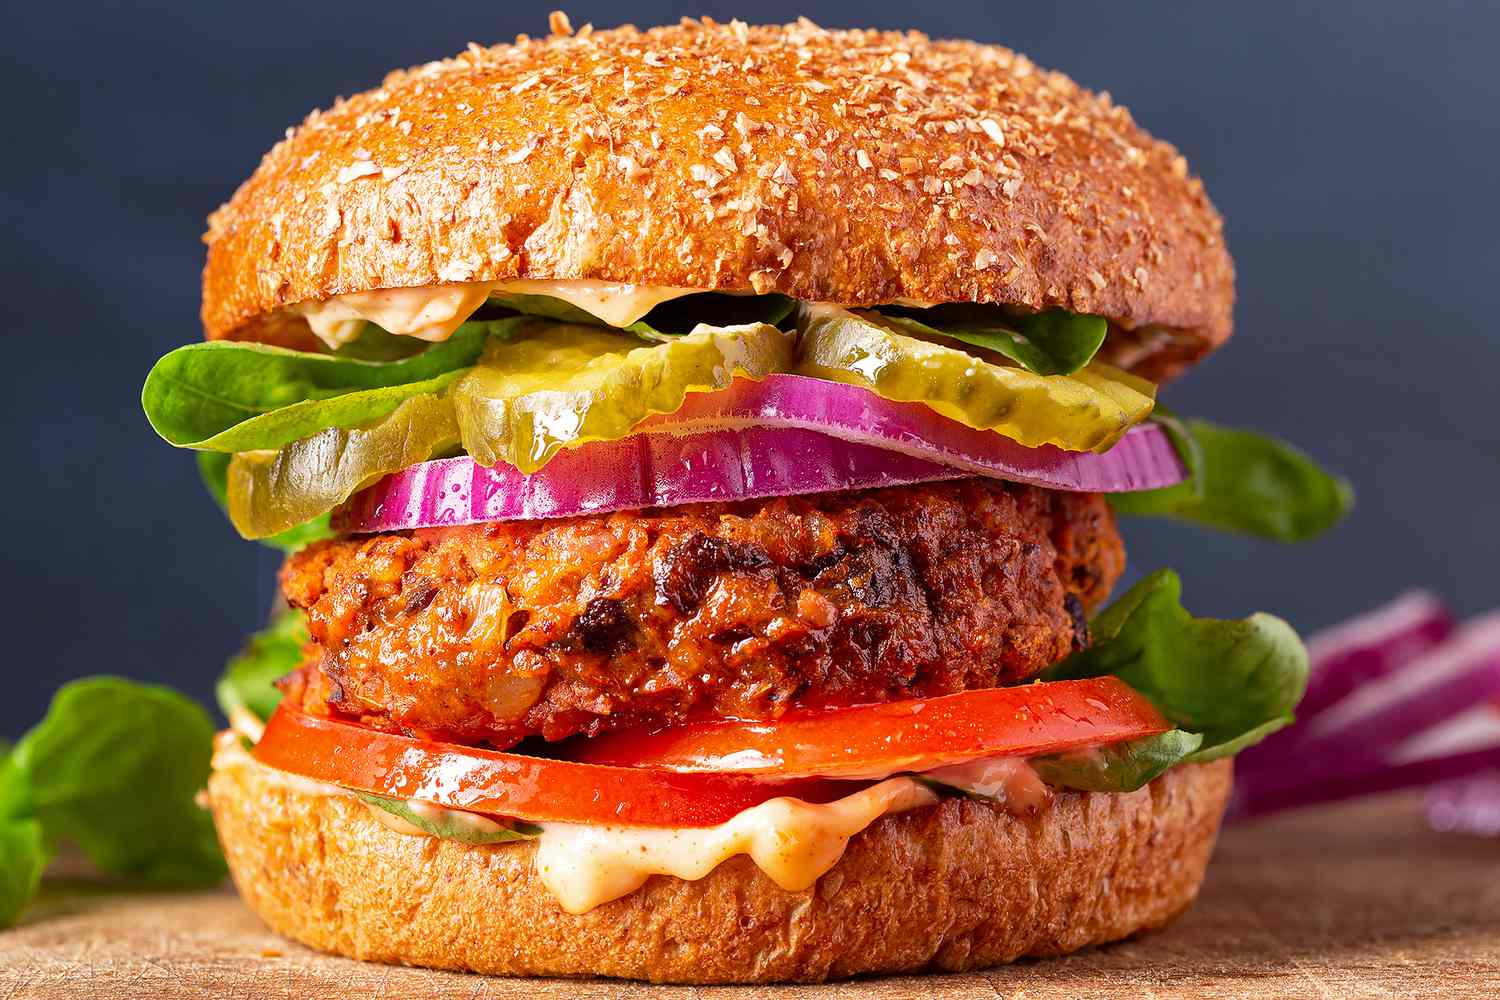 BADEEL Plant Based Burger, 270g, Vegan, Gluten free